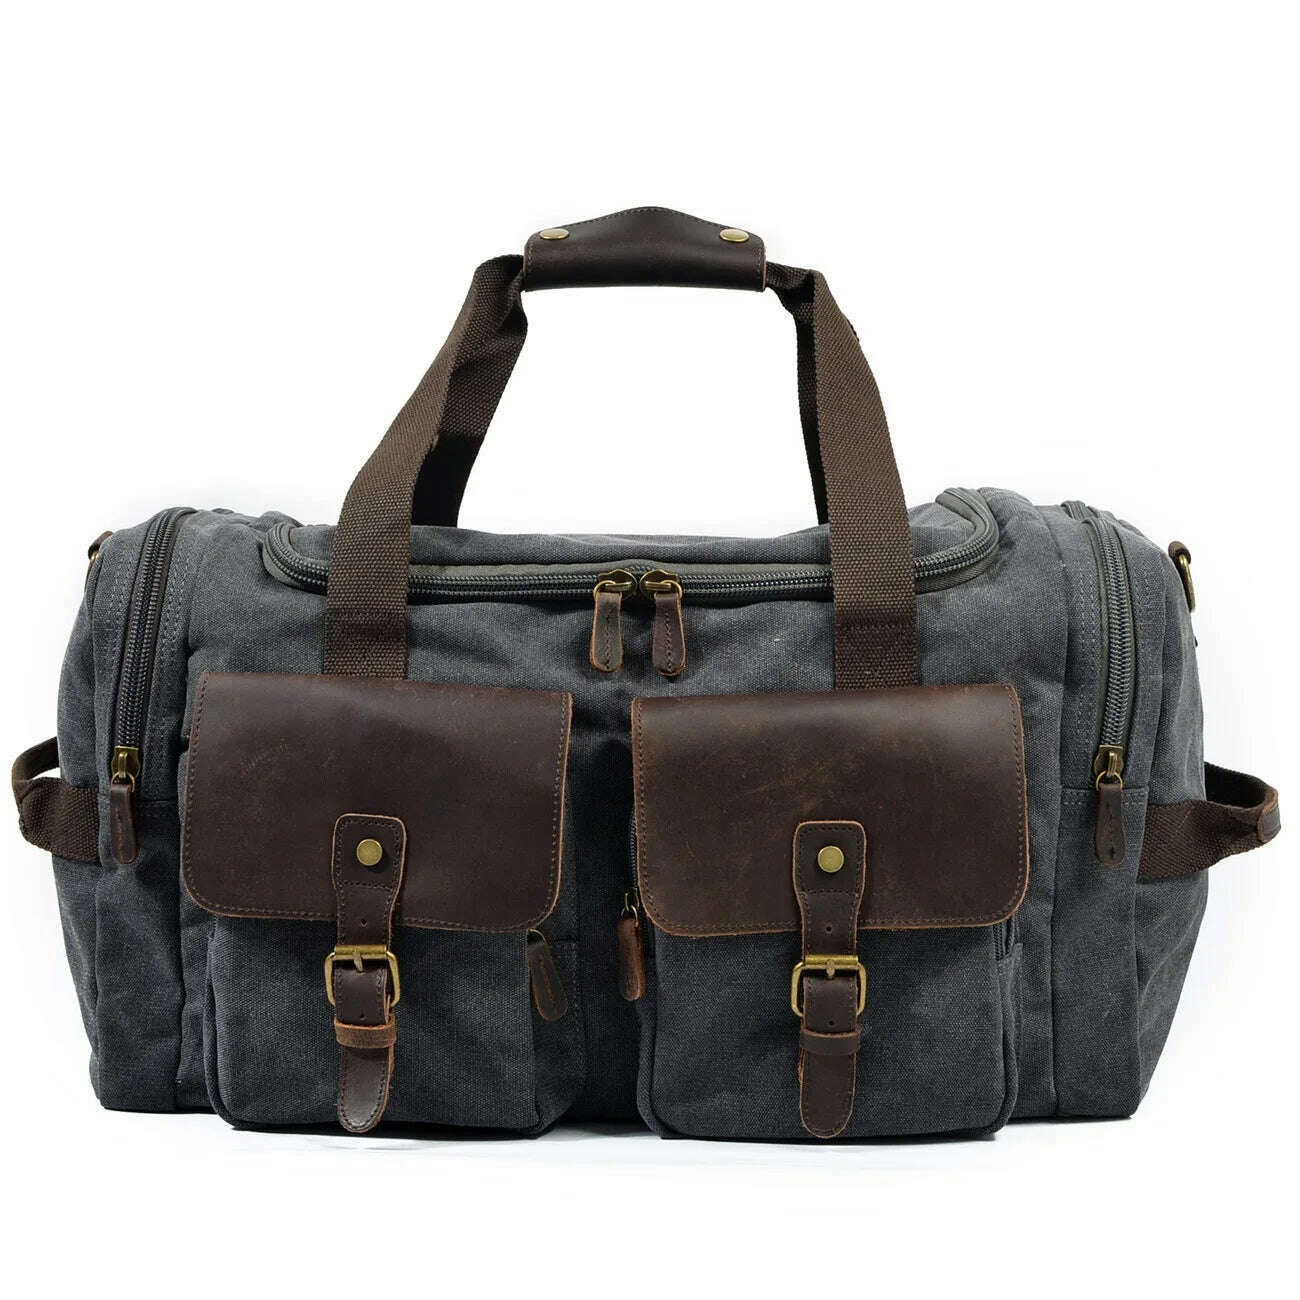 KIMLUD, Canvas bag large capacity for men's handbags leisure wear one shoulder aslant luggage, Dark grey, KIMLUD Womens Clothes